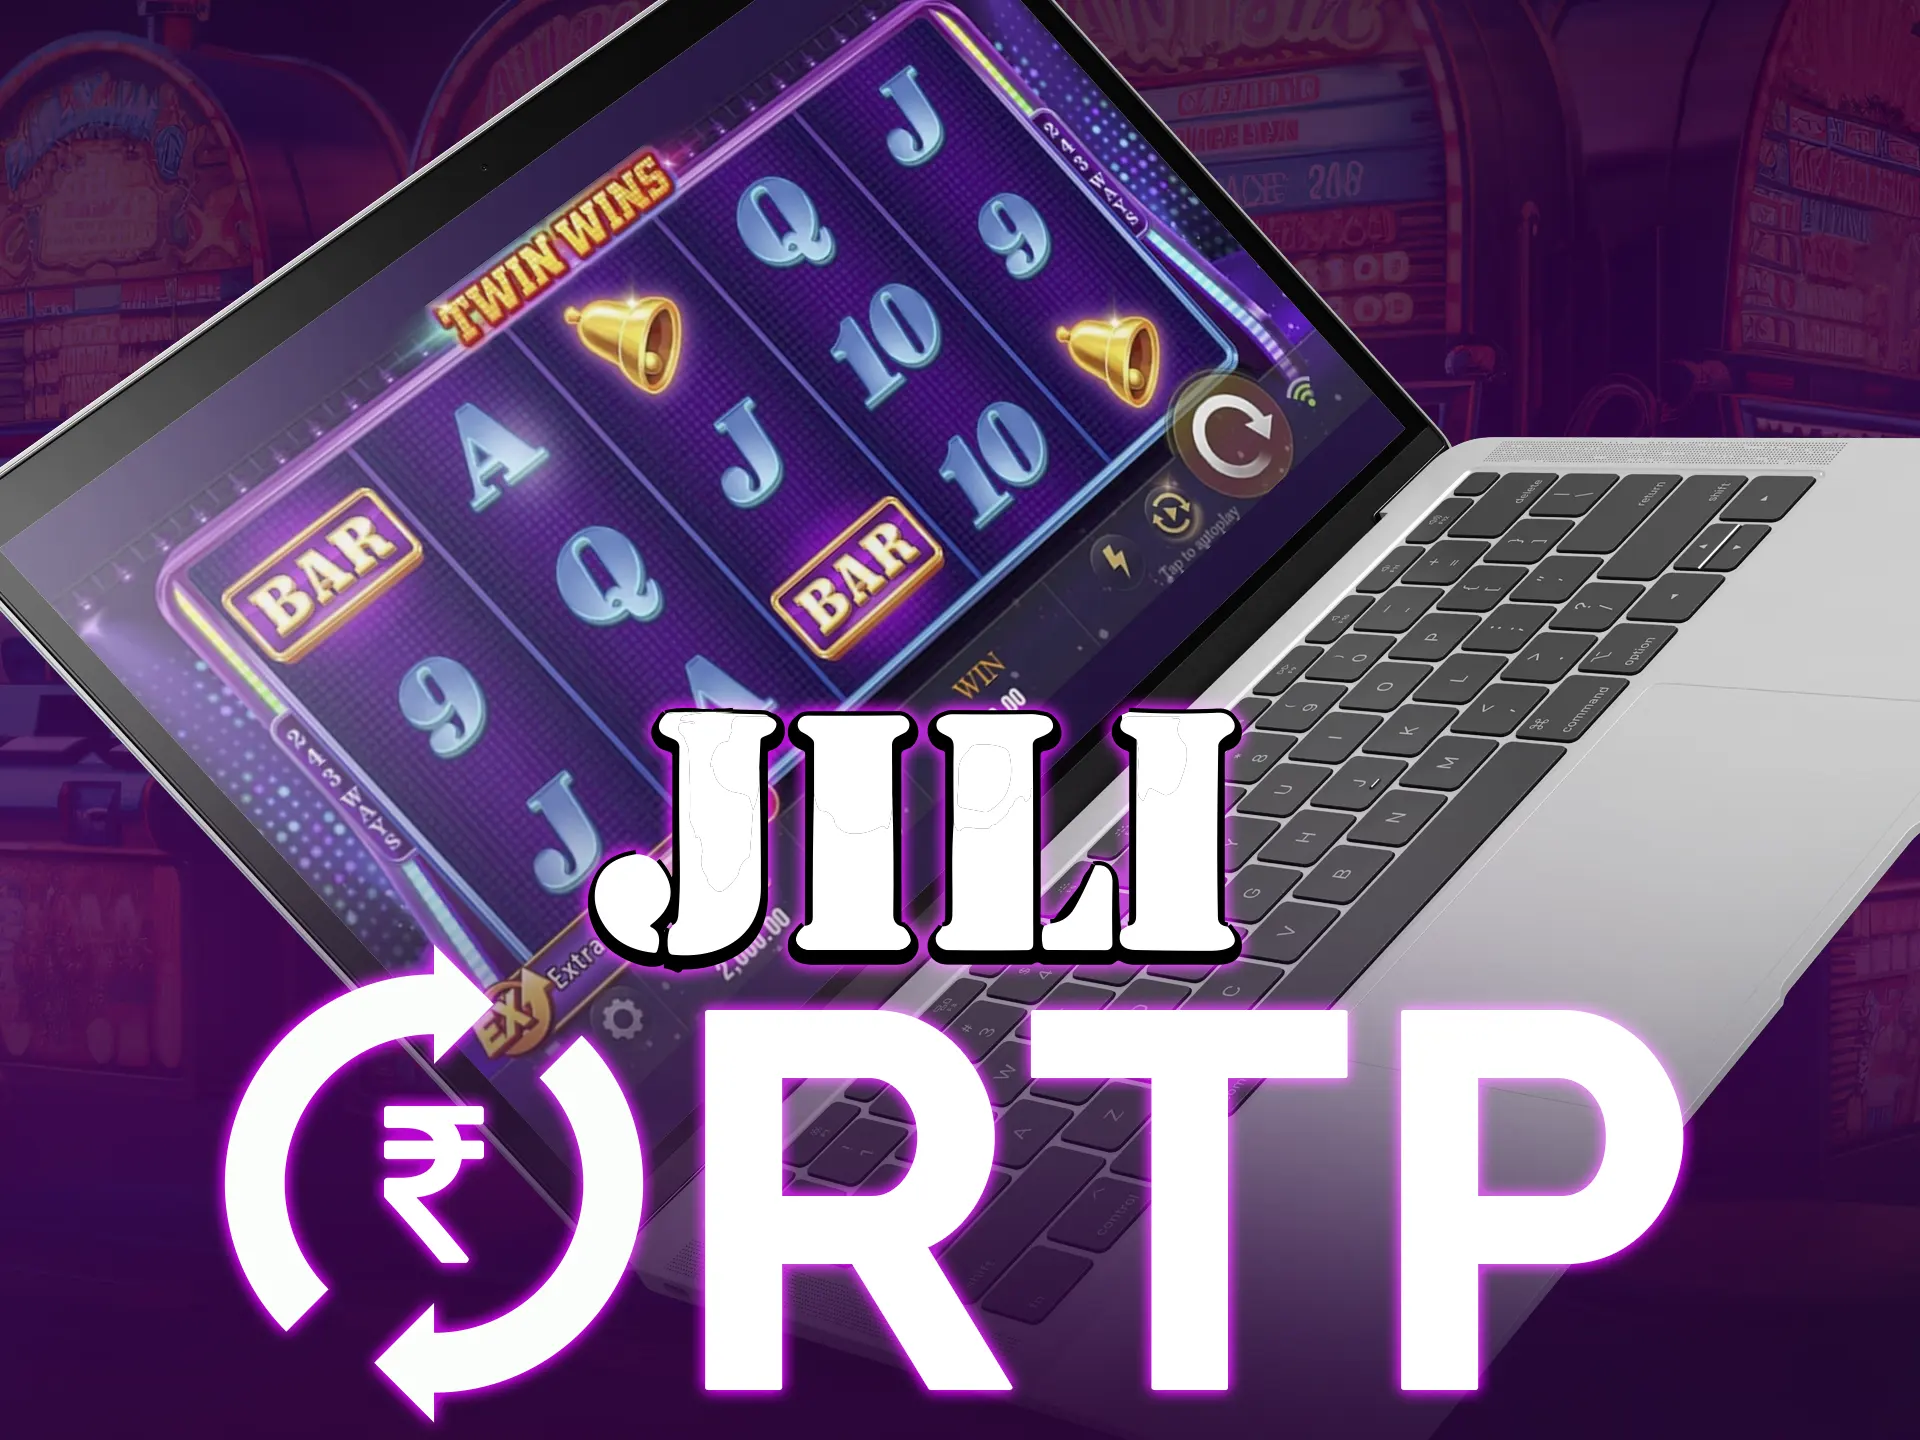 Enjoy Jili slots with high RTP: RomaX, Crazy Hunter, Twin Wins - 97%.